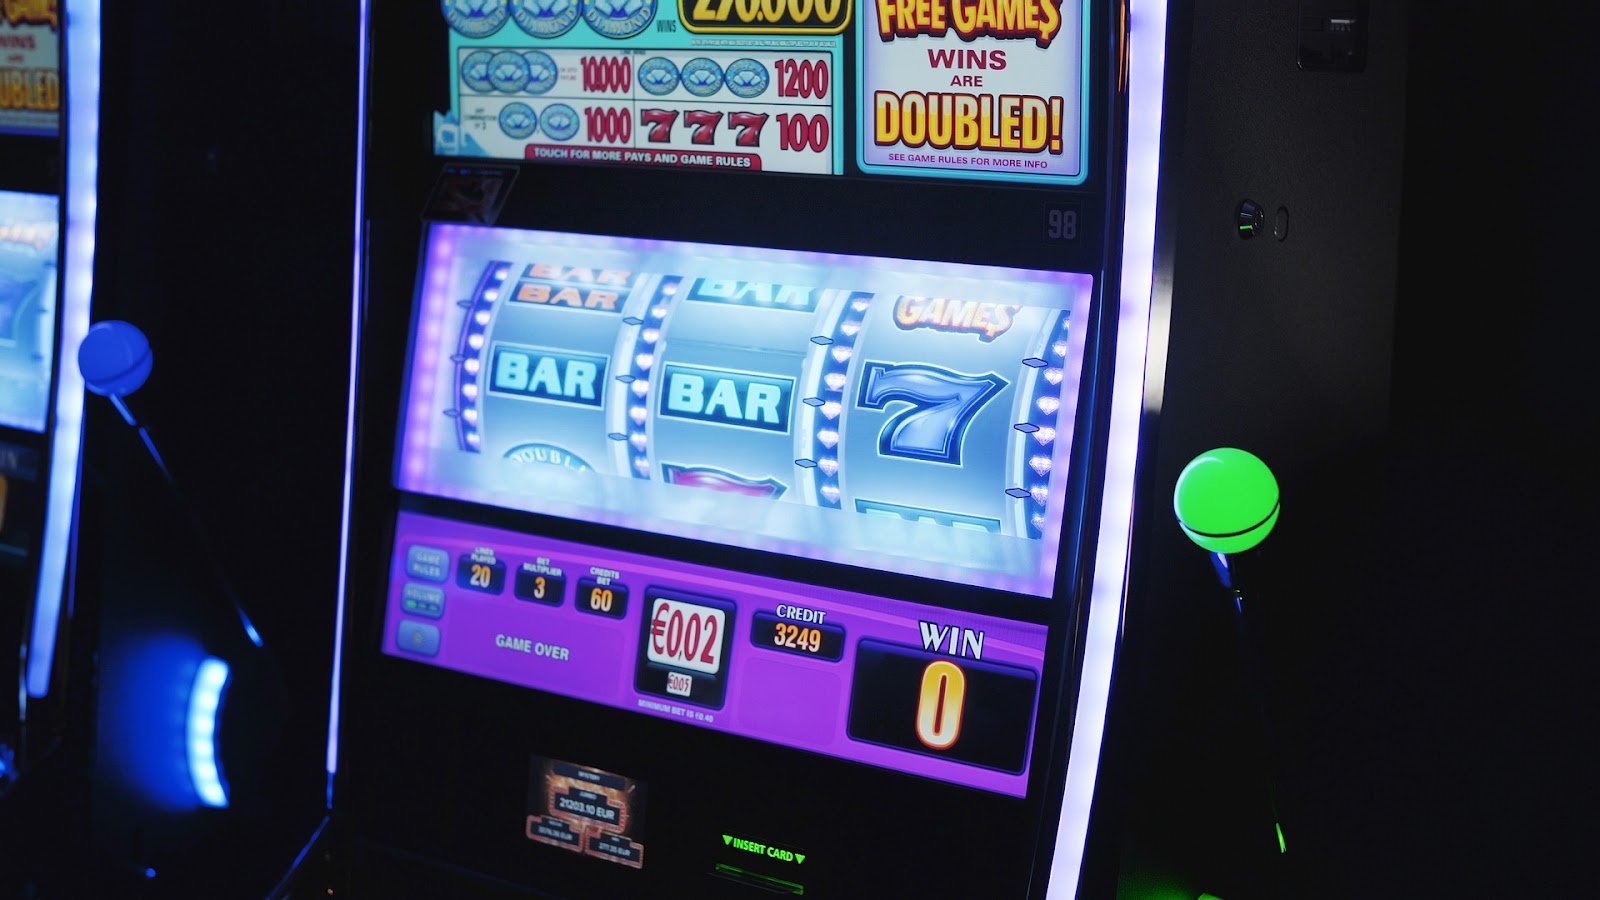 Slot machine displaying 'Bar, Bar, 7' on the wheels